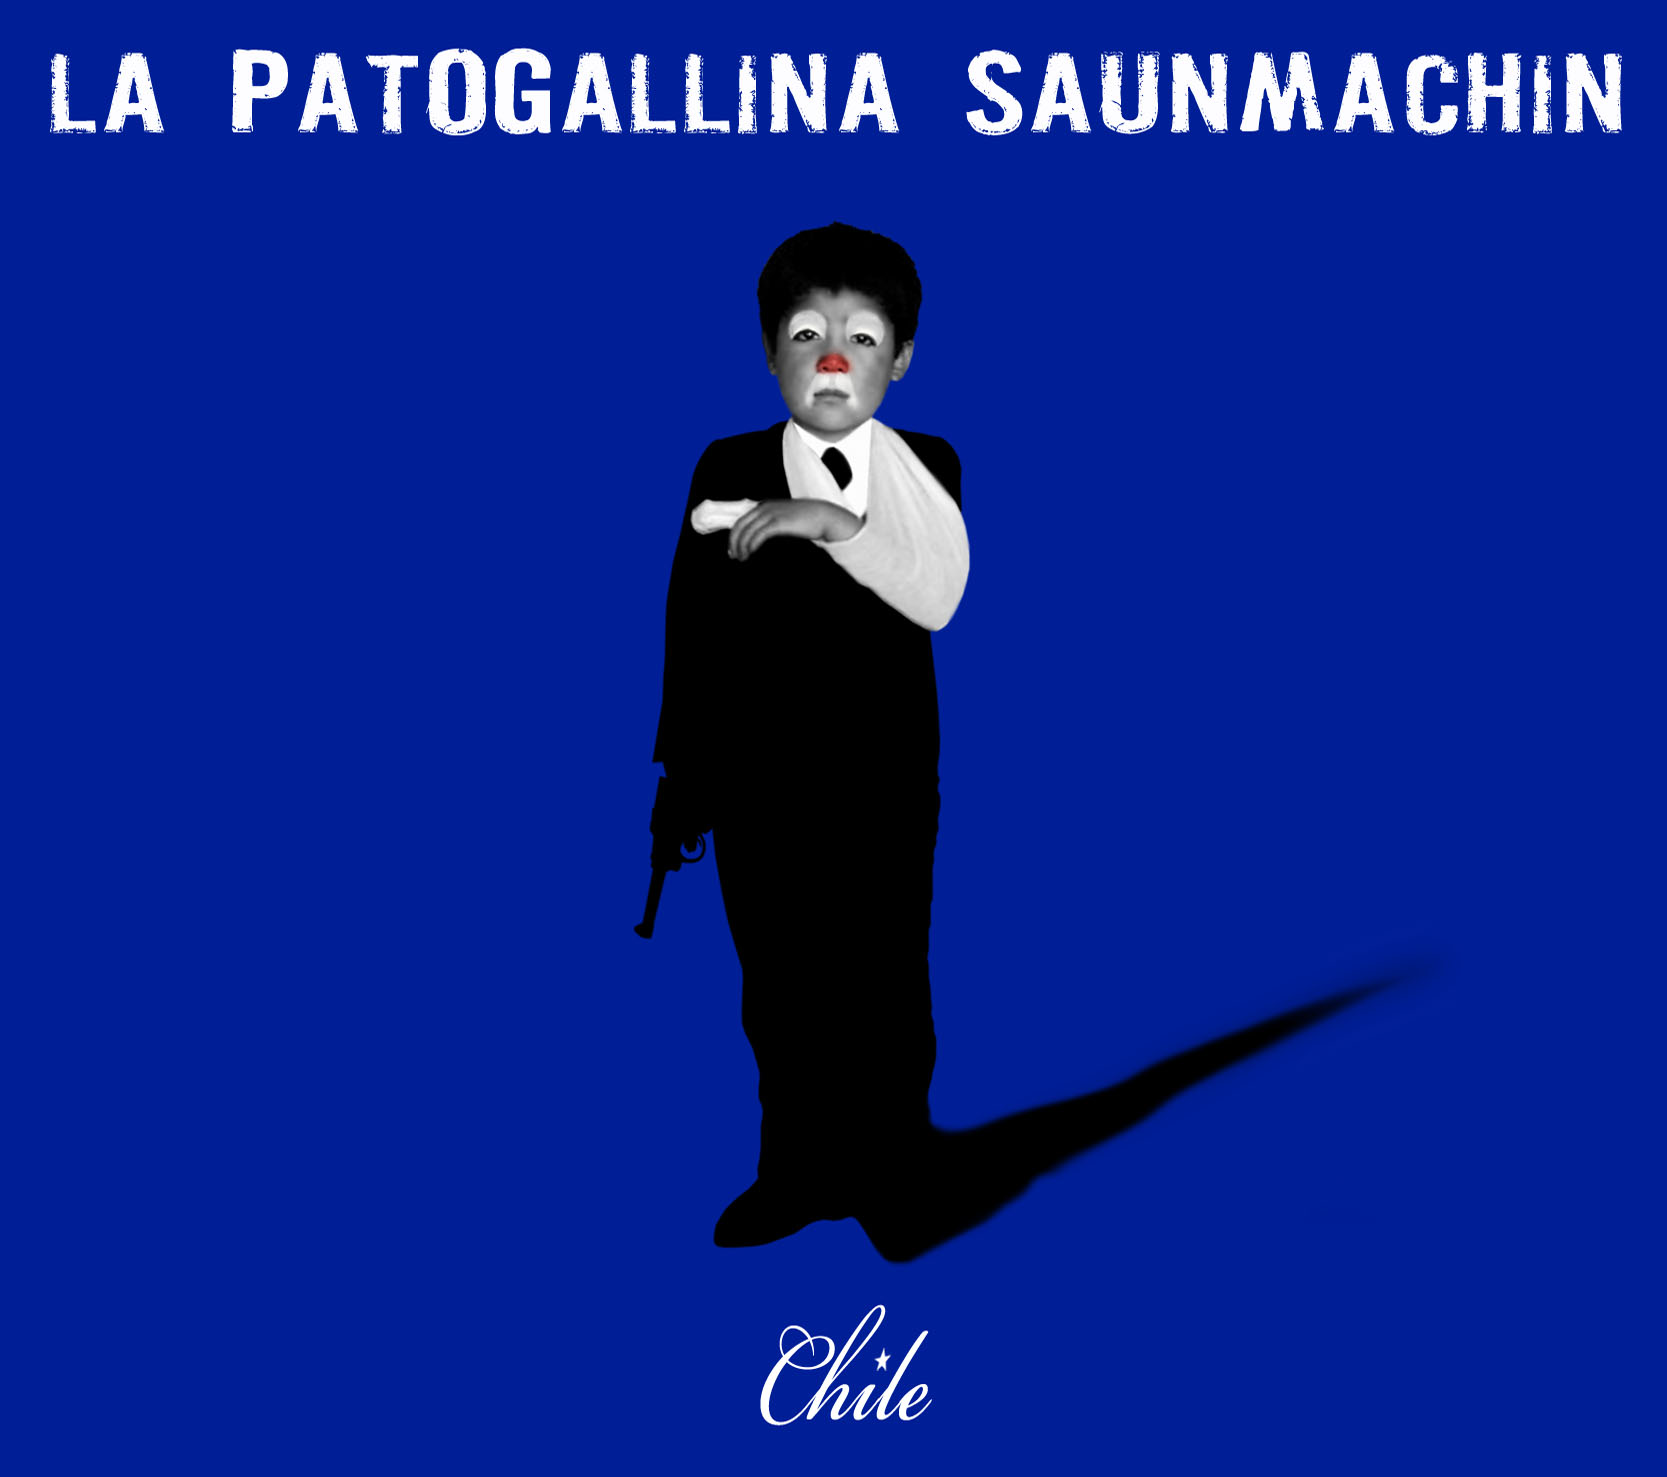 La Patogallina Saunmachin presenta “Chile” su primer disco larga duración